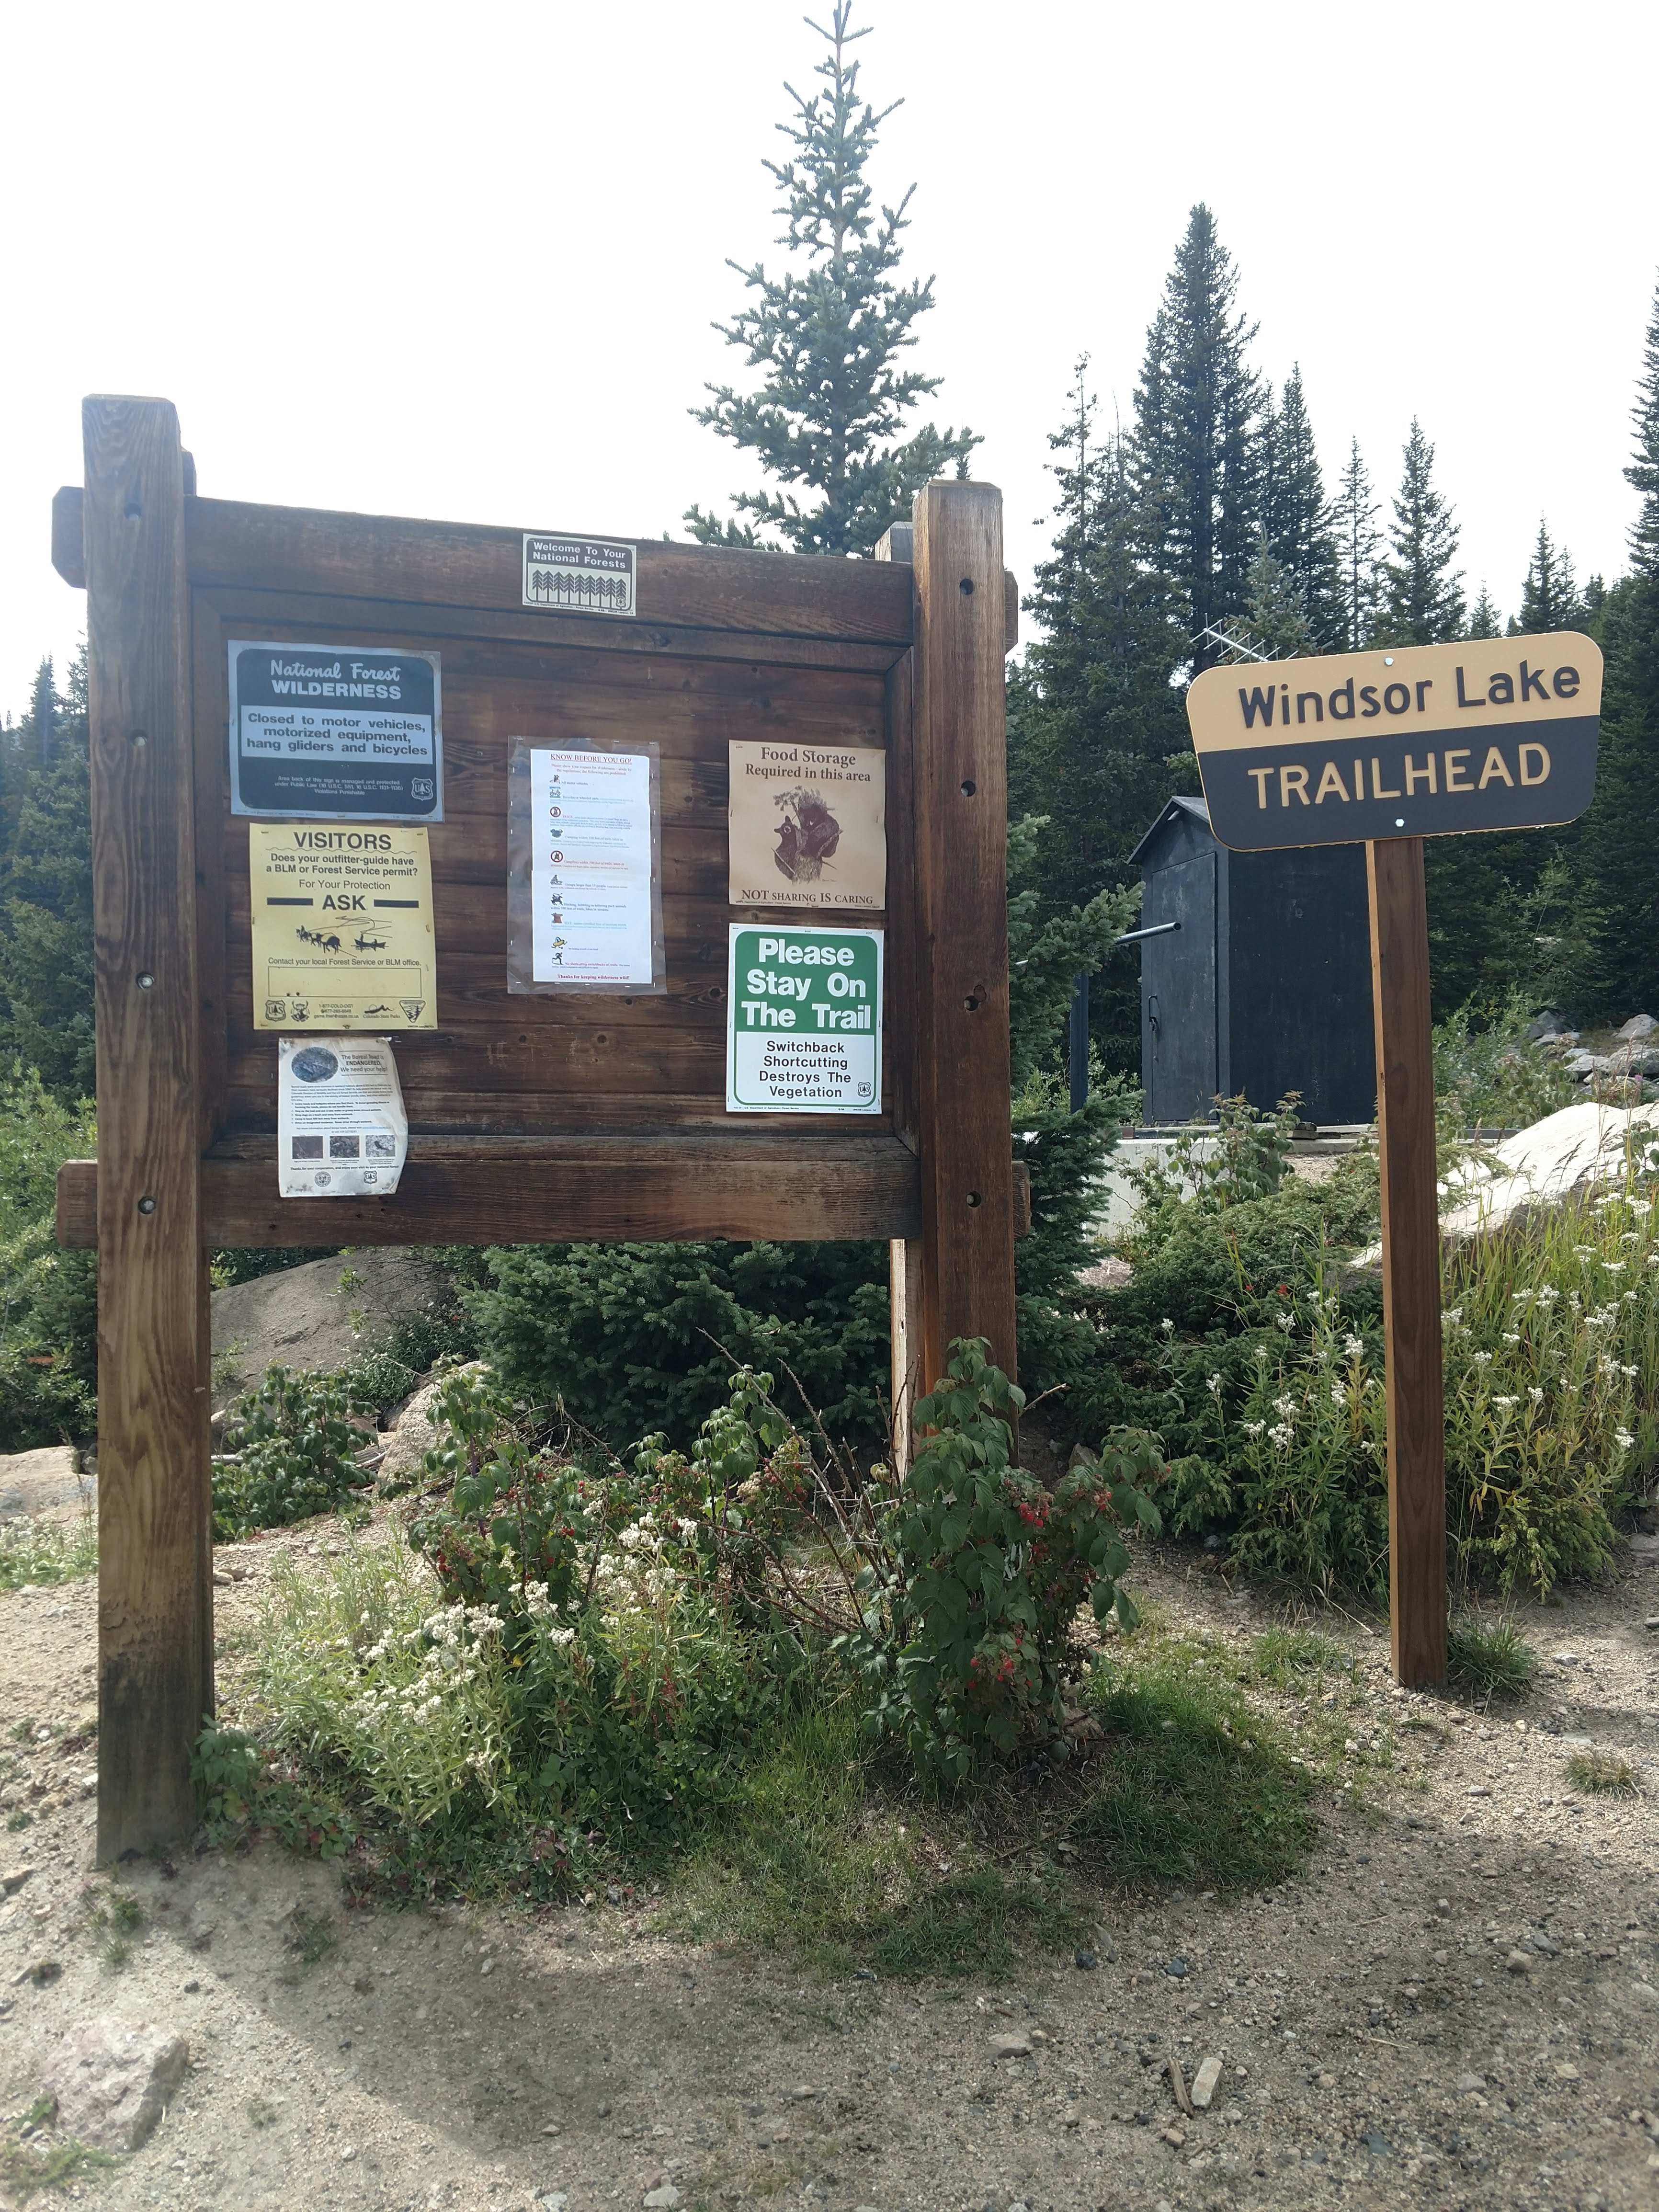 The Windsor Lake Trailhead signage.